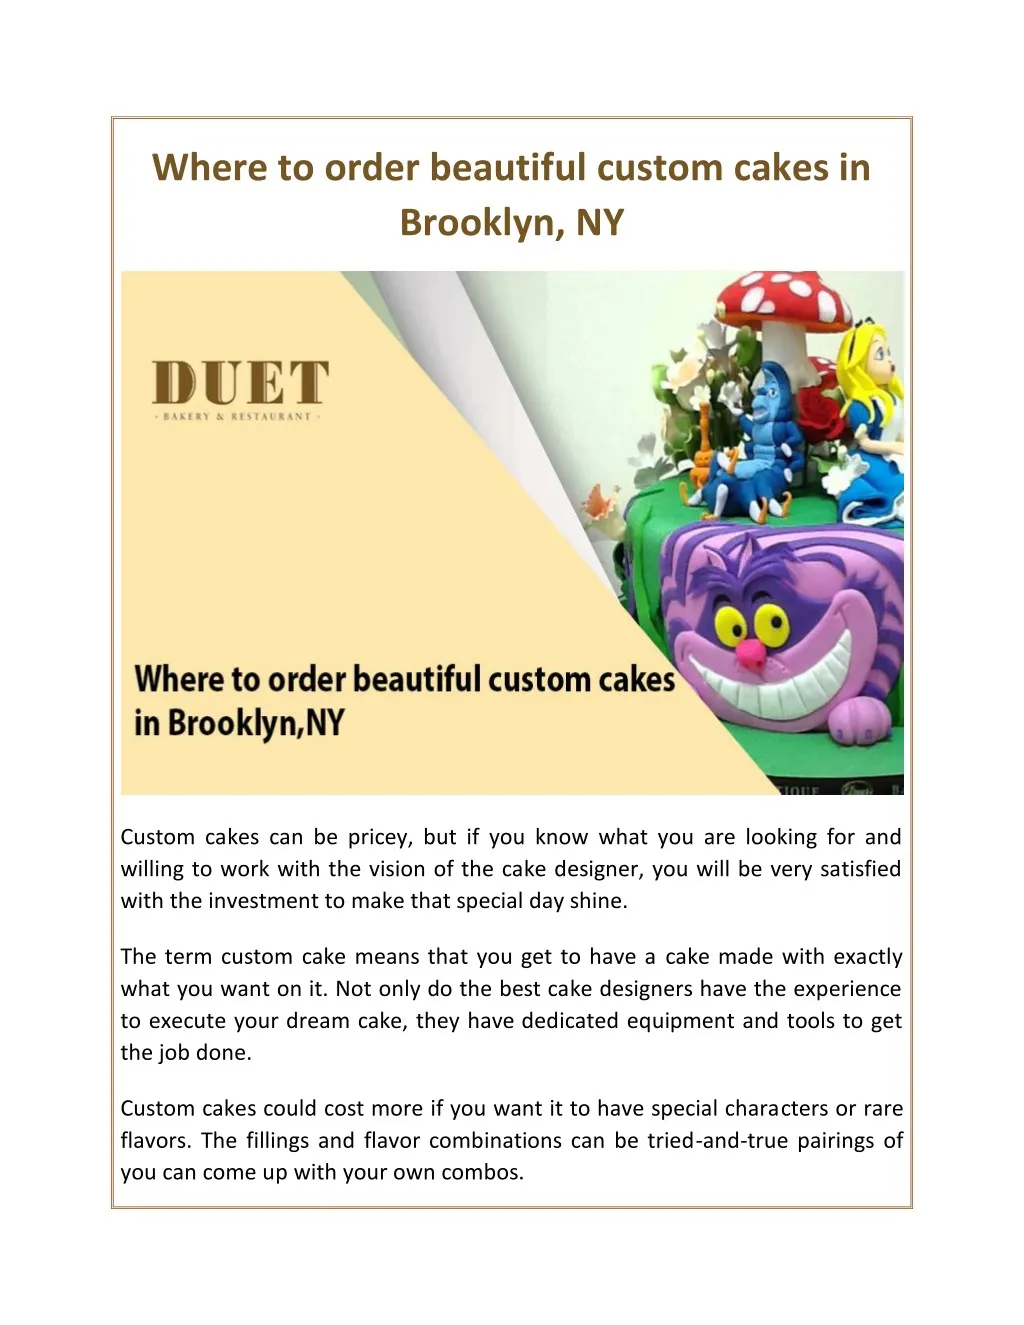 where to order beautiful custom cakes in brooklyn